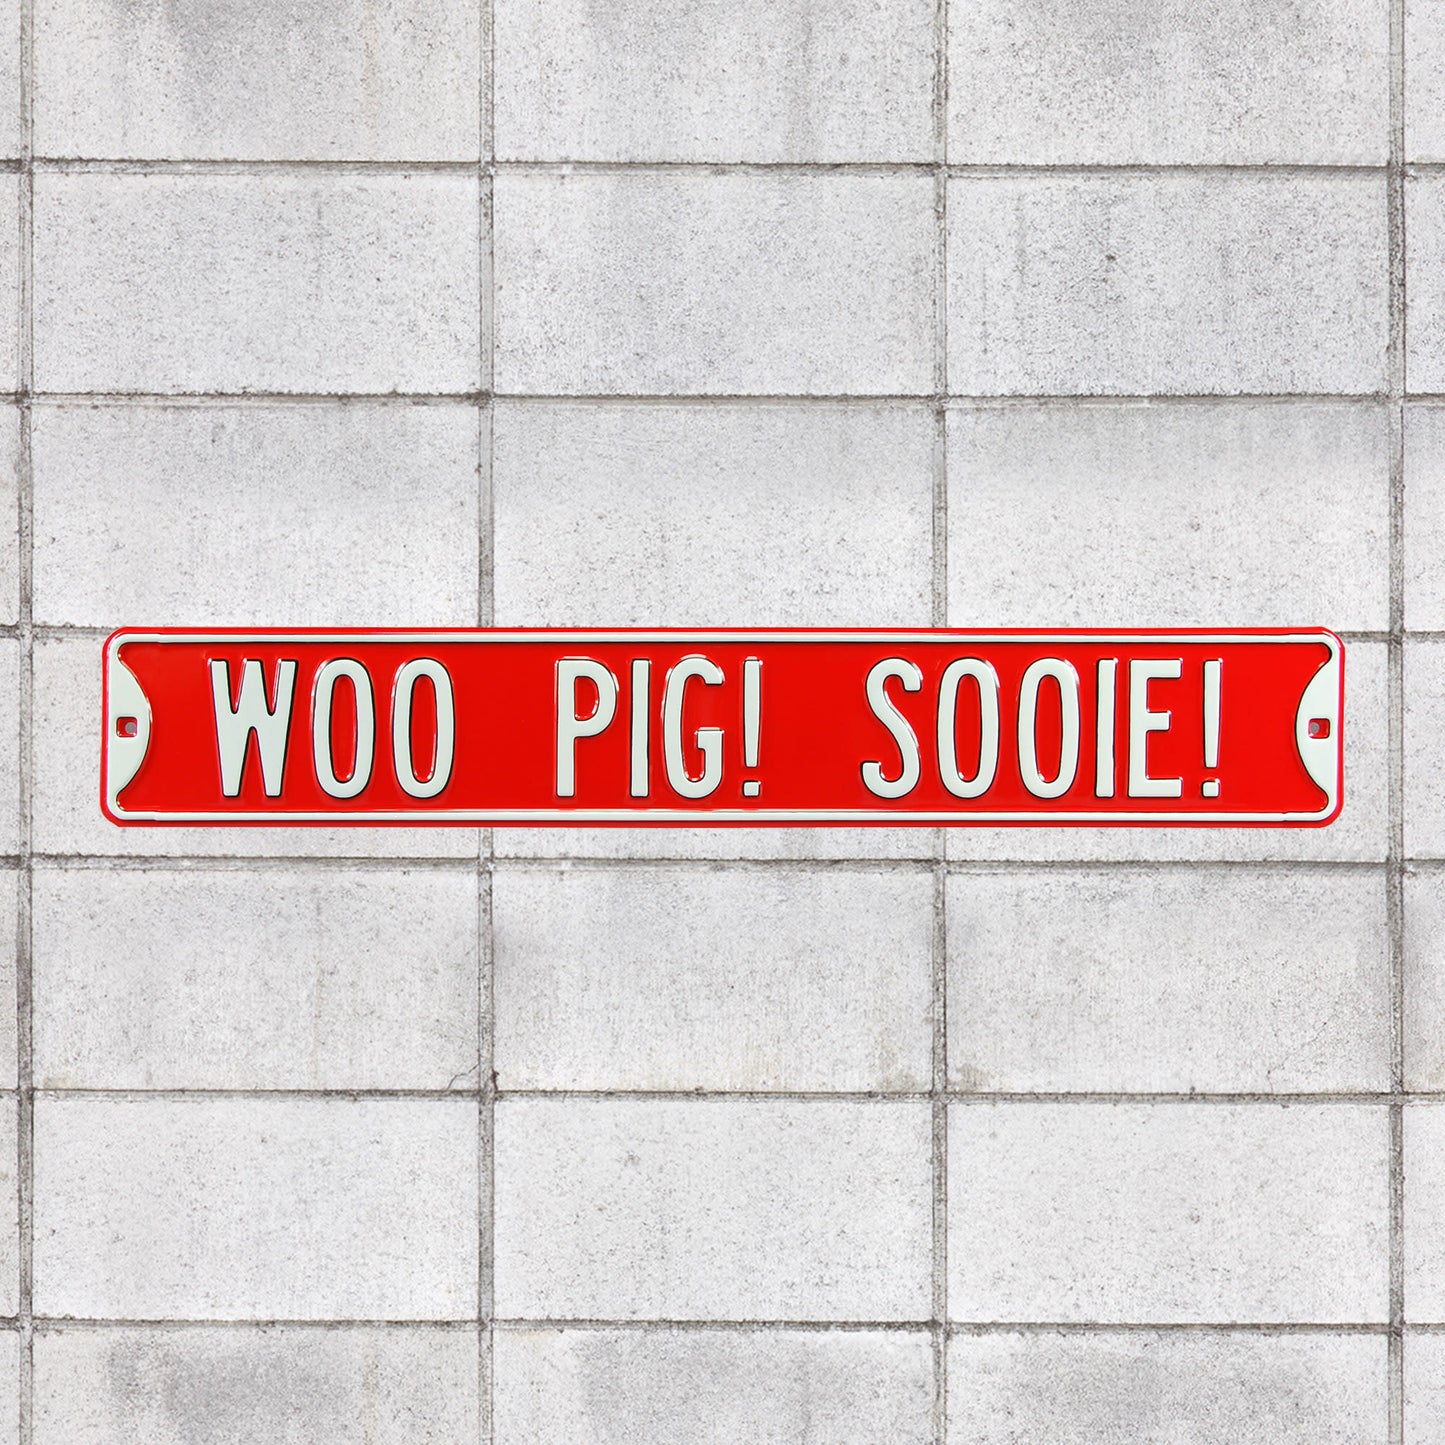 Arkansas Razorbacks: Woo Pig! Sooie! - Officially Licensed Metal Street Sign